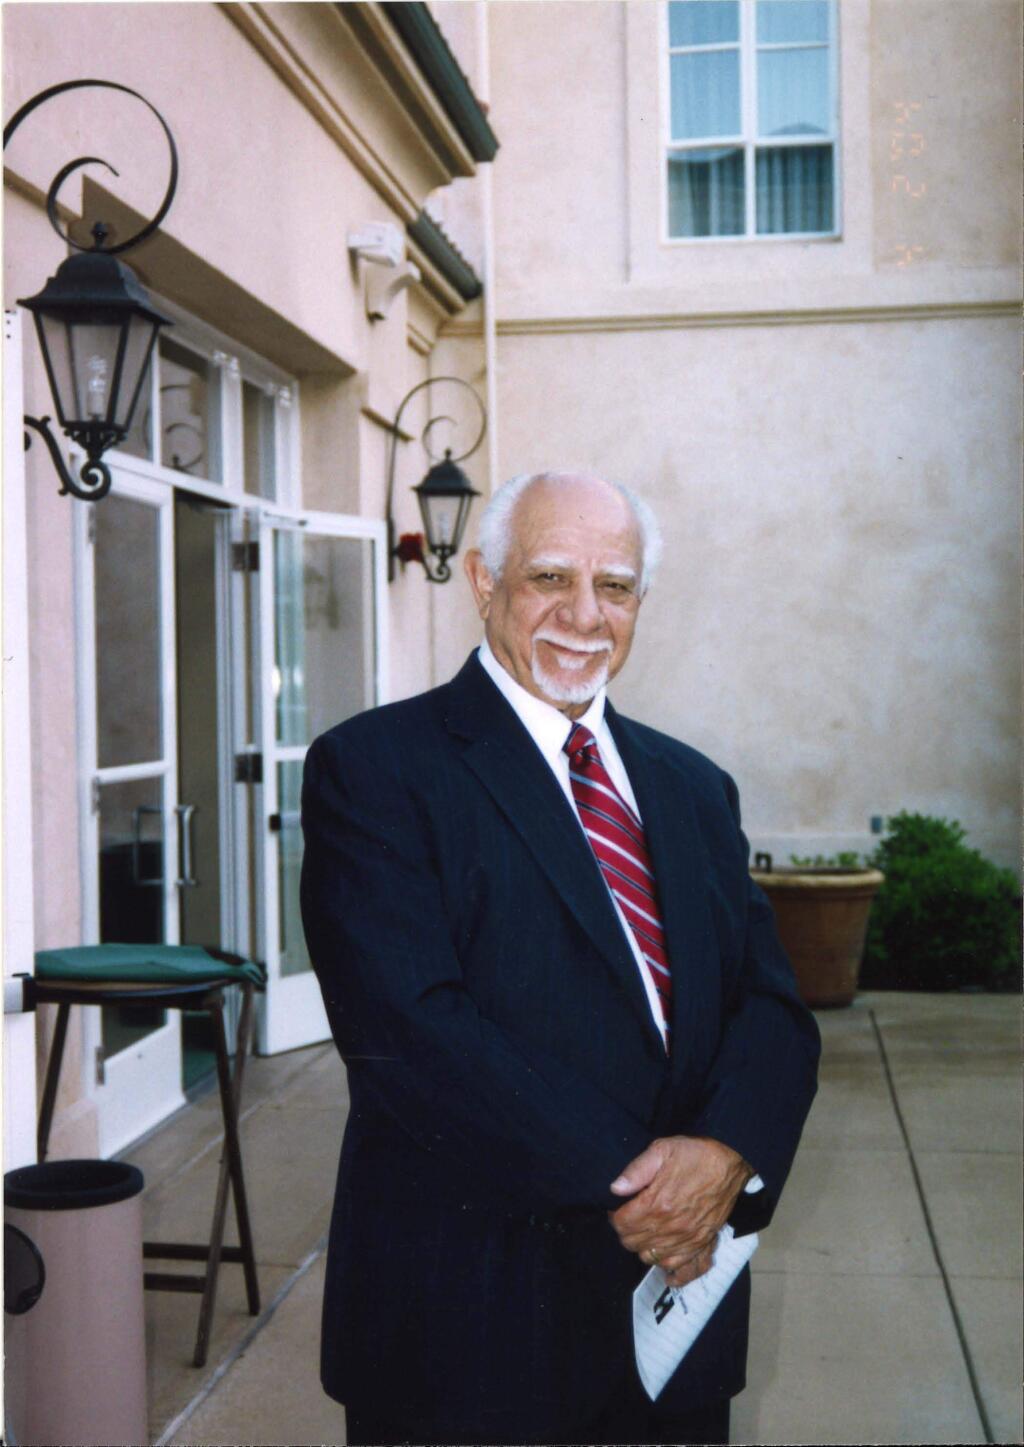 George Ortiz, co-founder of the California Human Development Corporation